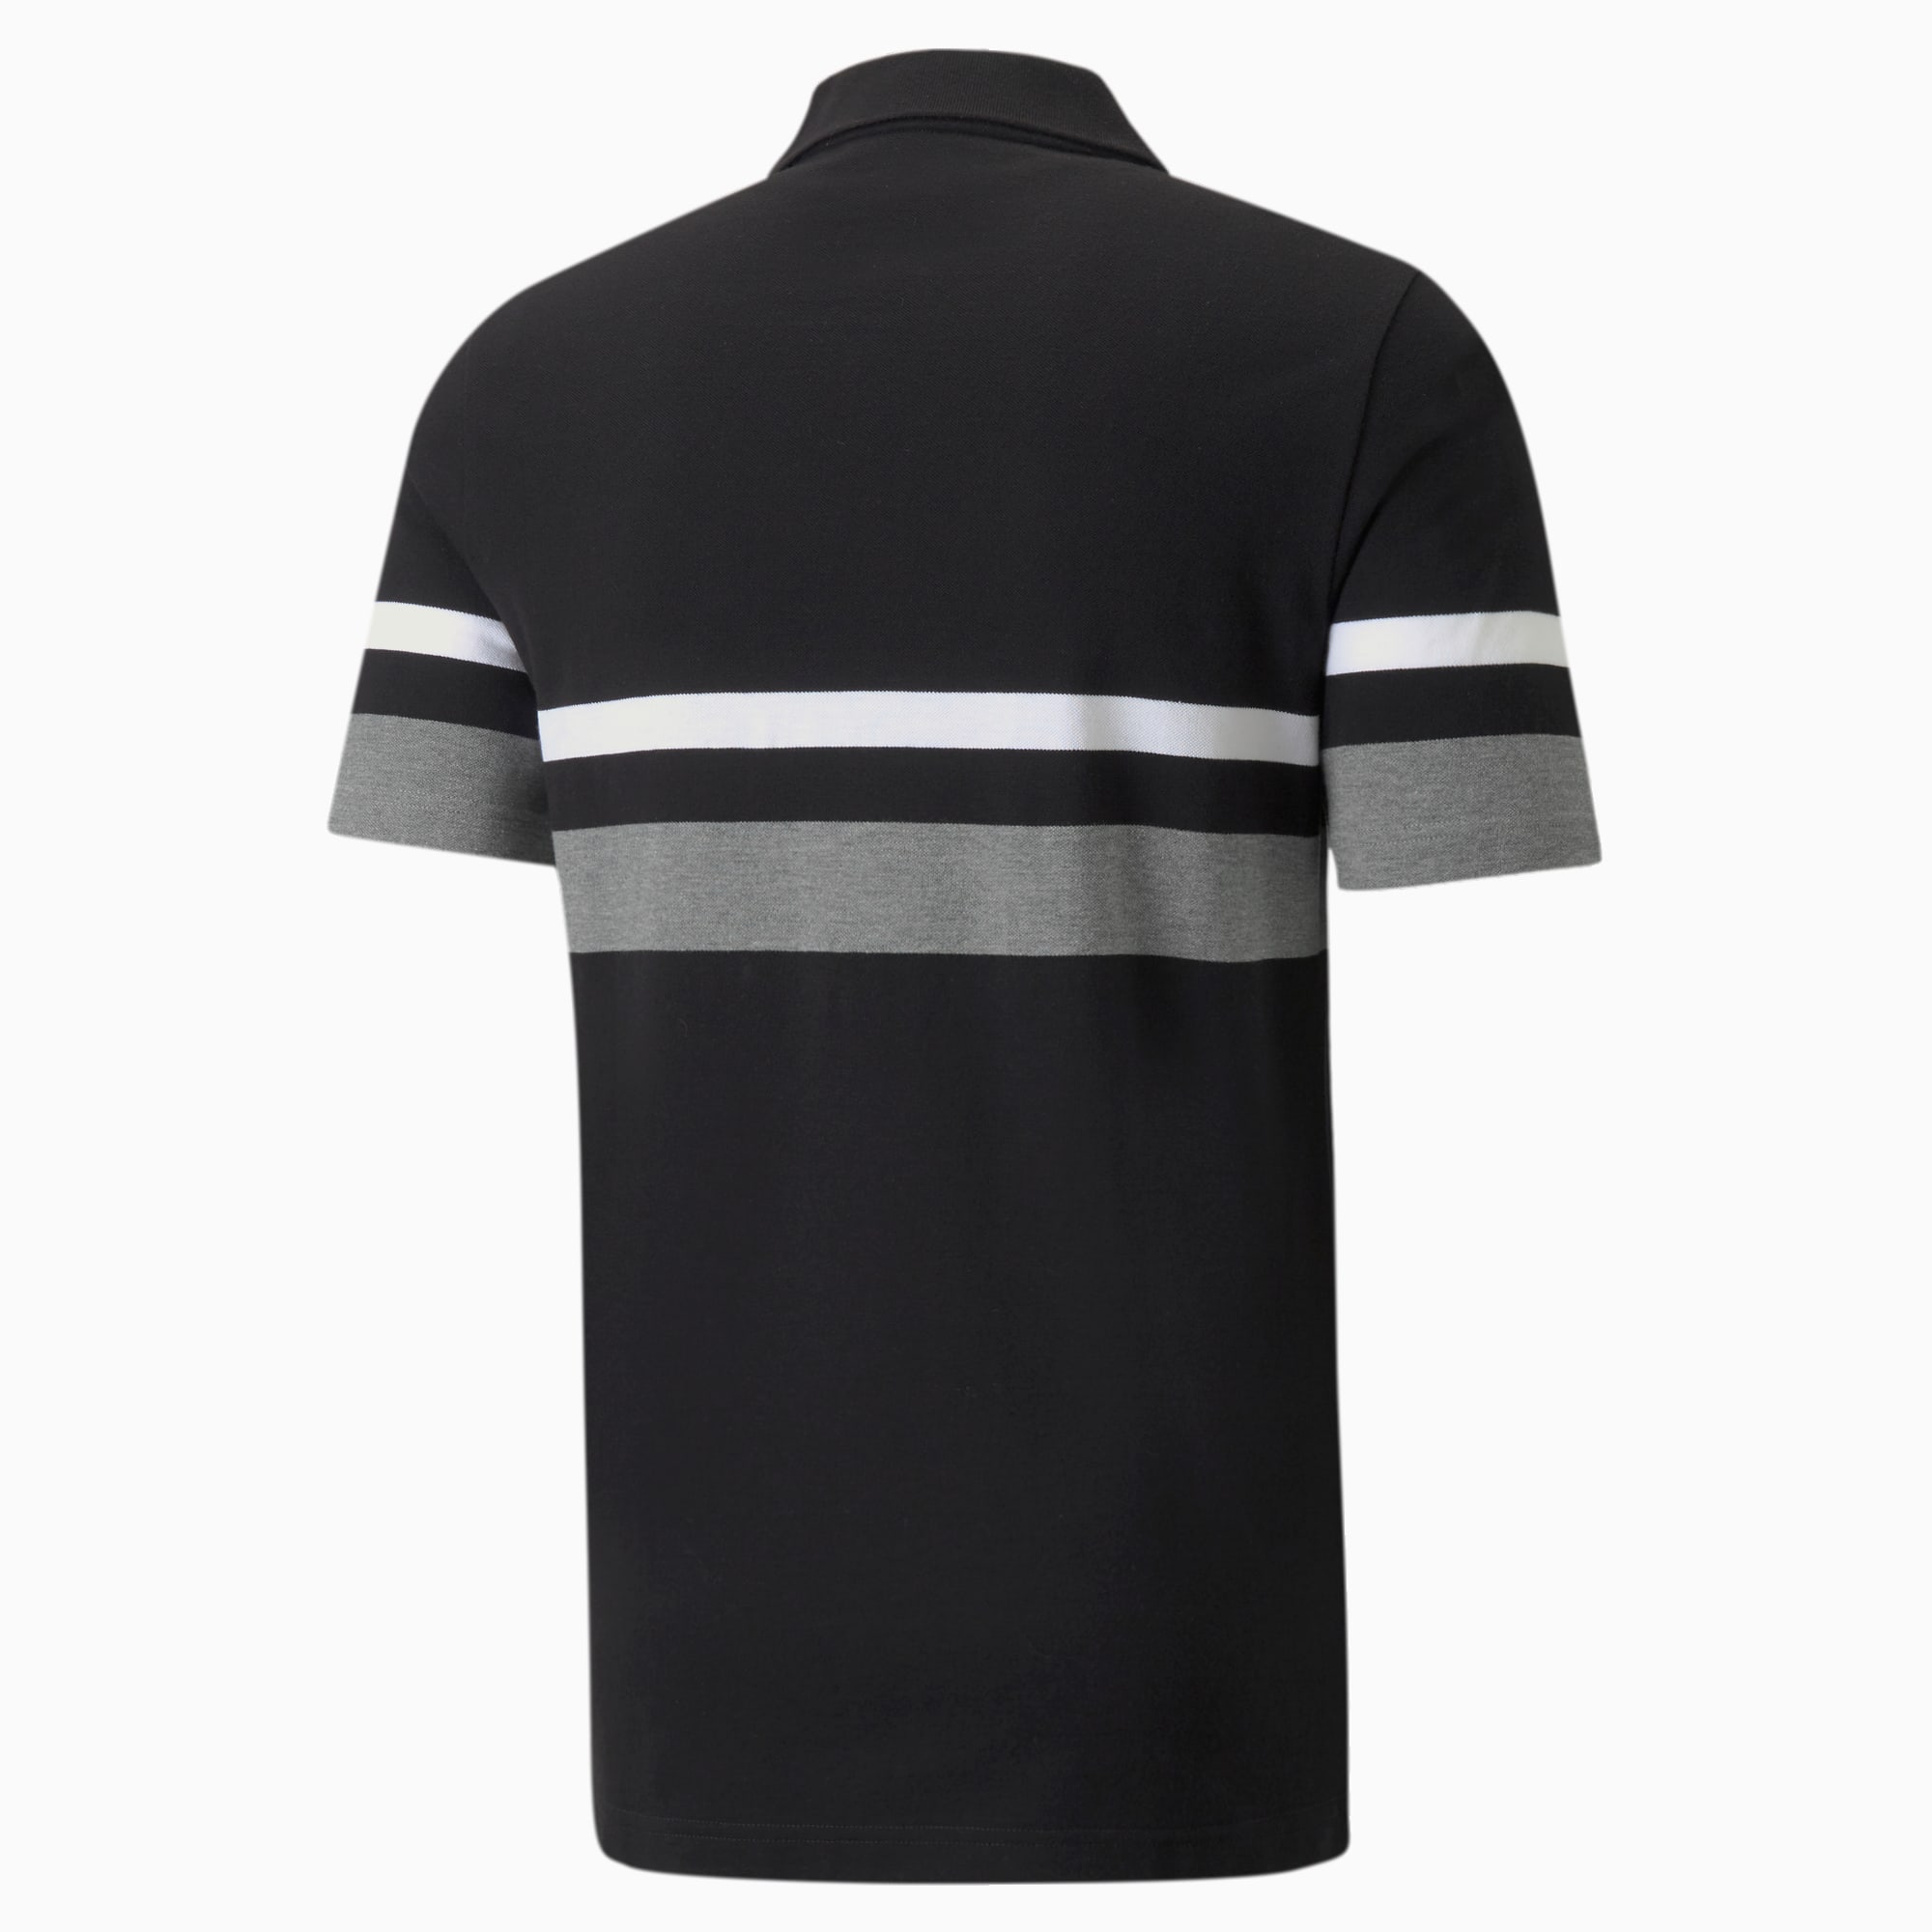 PUMA Essentials Stripe Men's Polo Shirt, Black, Size L, Clothing